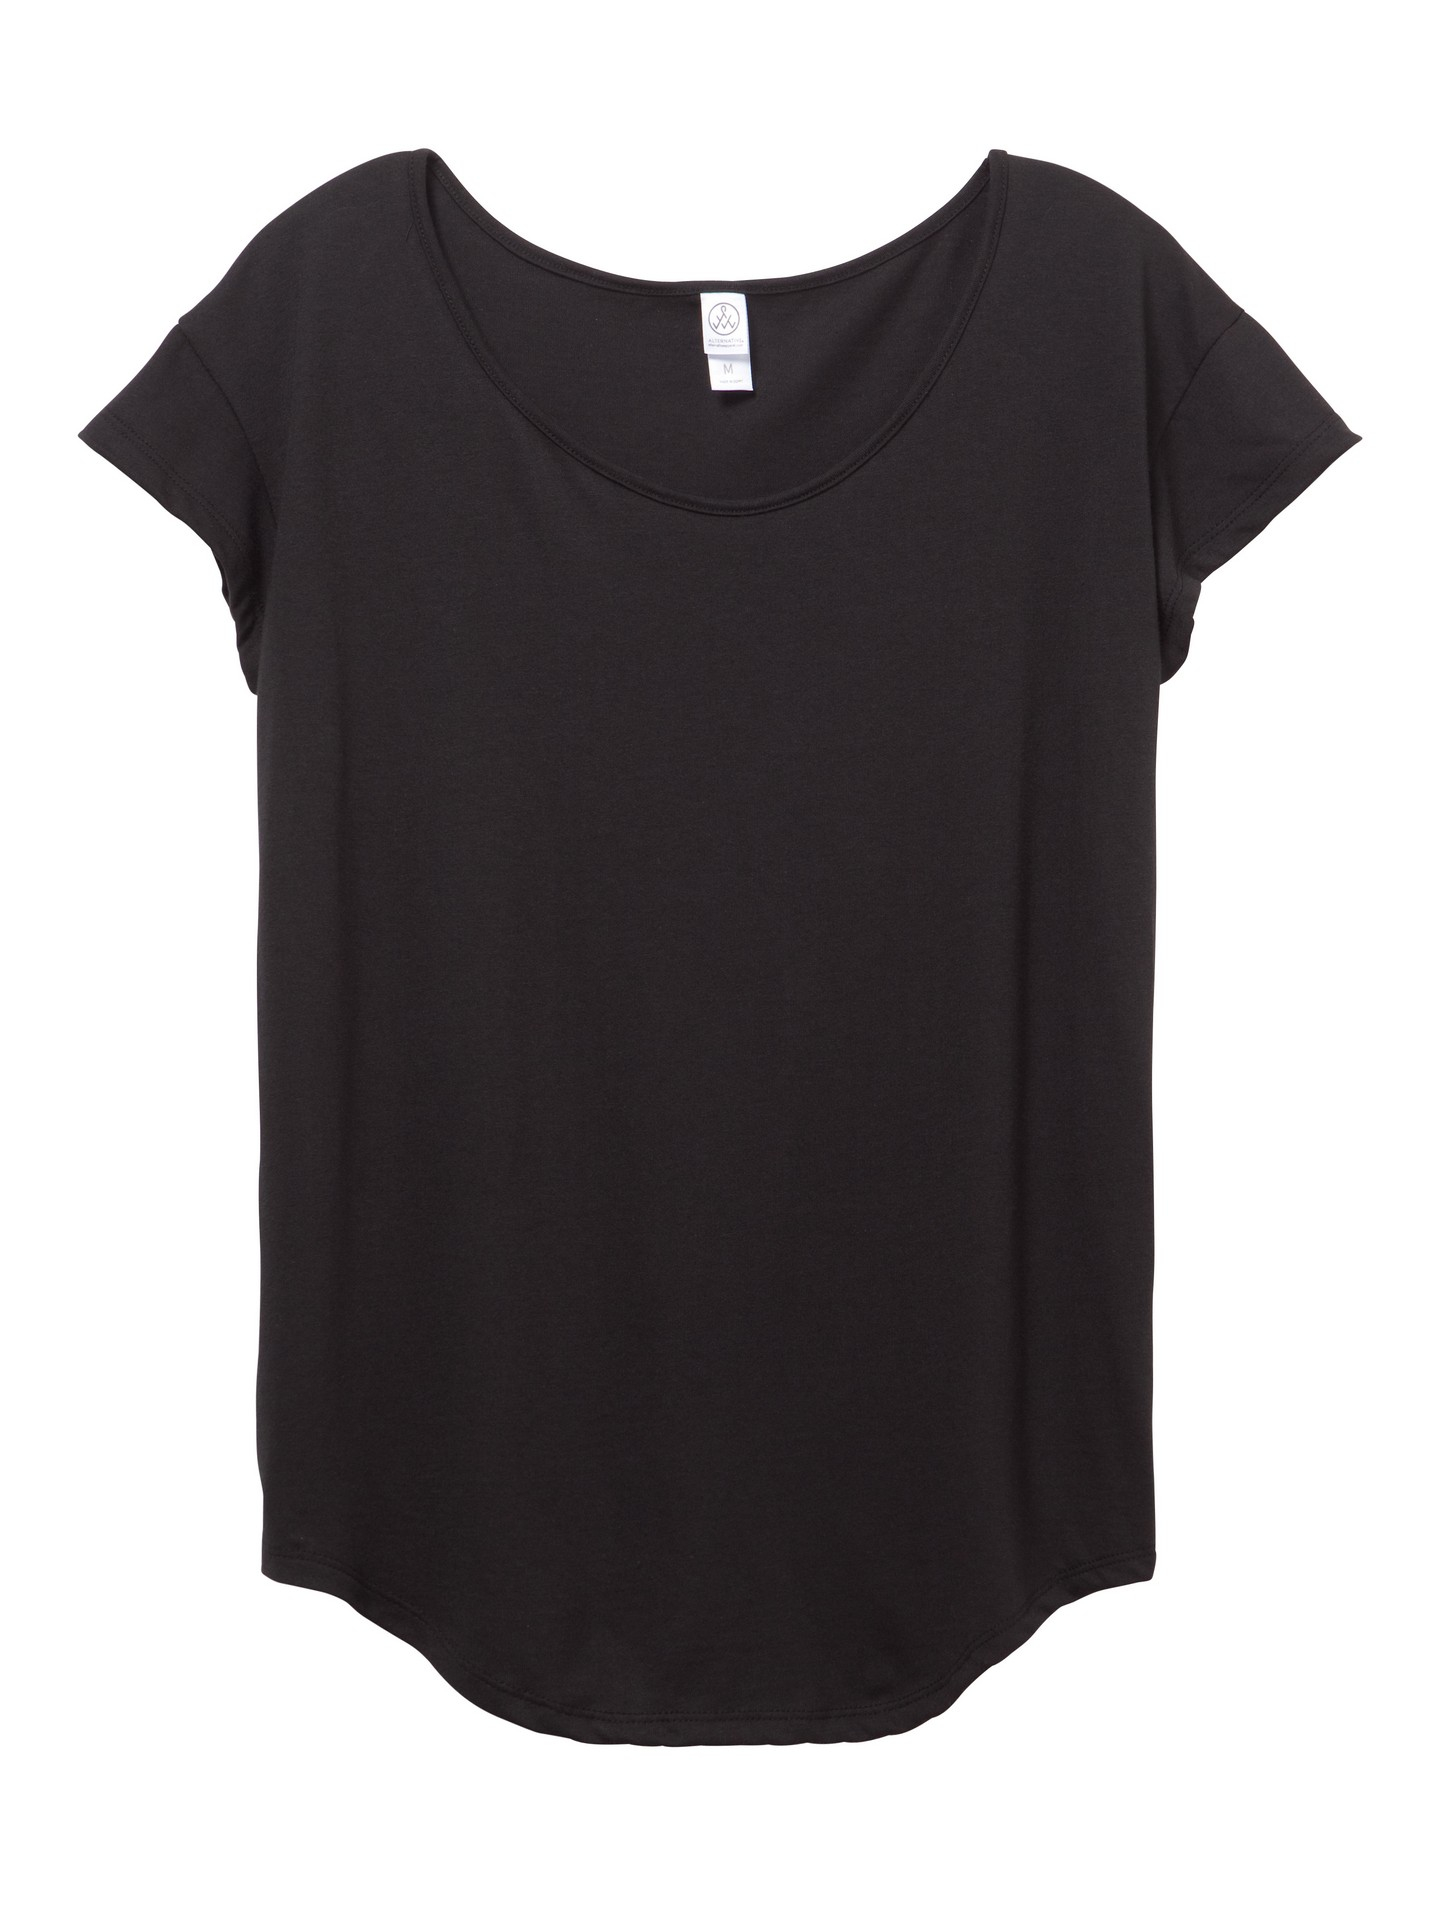 Alternative Apparel Origin Cotton Modal T-shirt in Black - Lyst